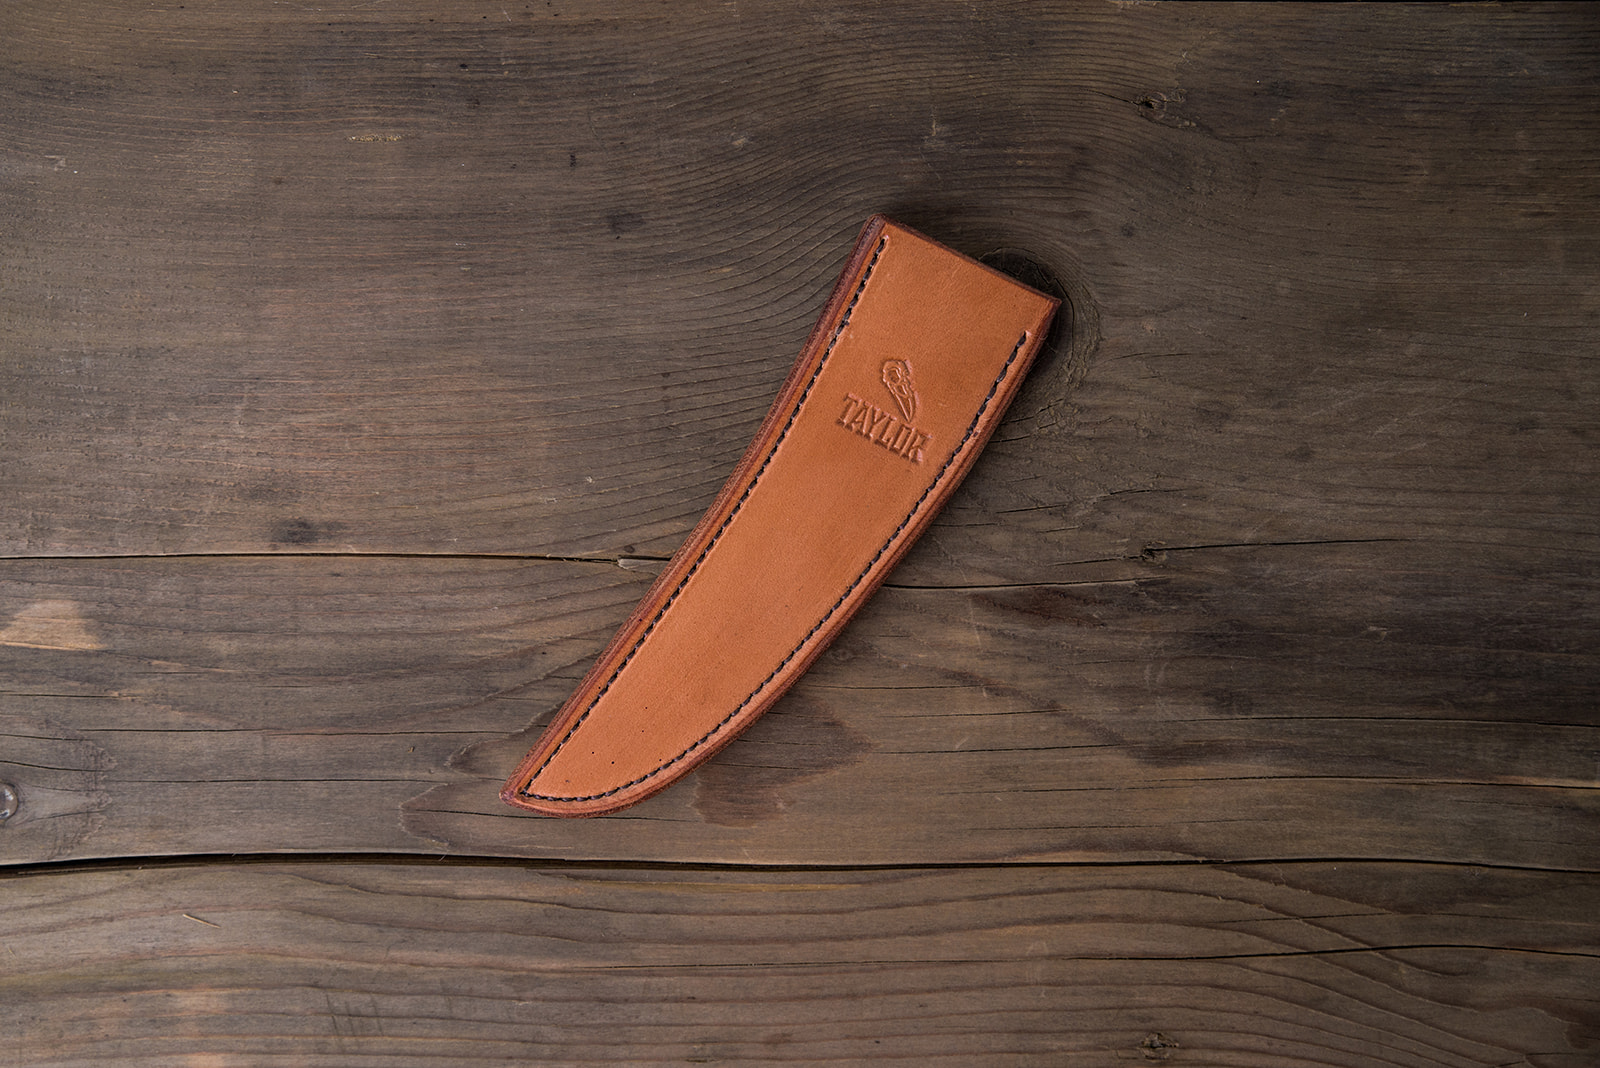 Leather Strop – Jeb Taylor Knives